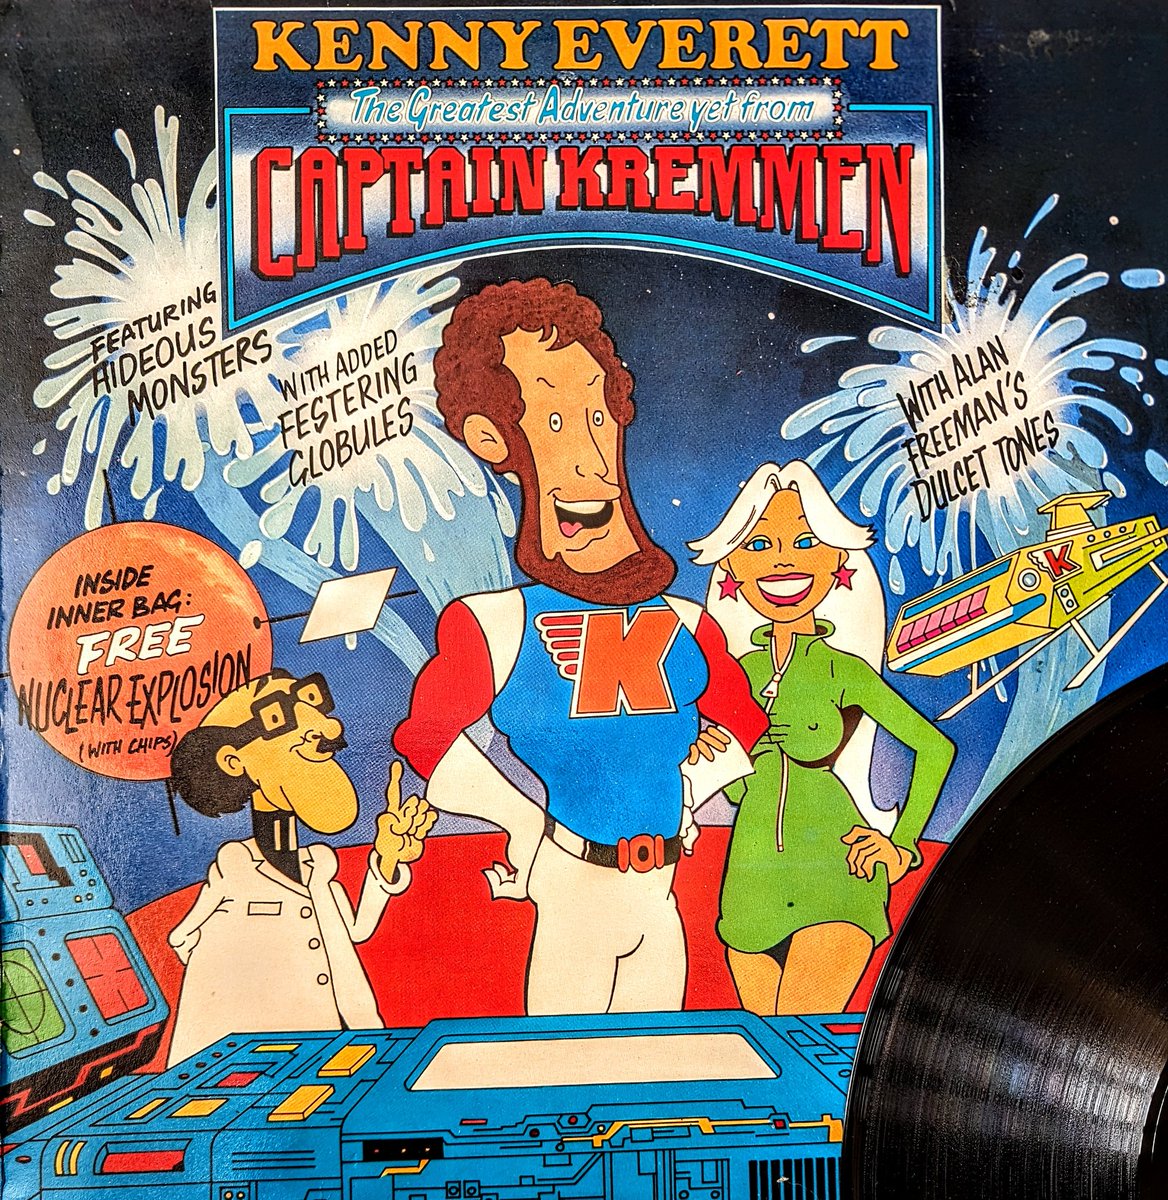 Released on vinyl in 1980 by CBS Records, here's the 'The Greatest Adventure Yet From Captain Kremmen'! Via the mind of Kenny Everett, join Captain Elvis Brandenburg Kremmen, Carla, and Dr. Heinrich von Gitfinger in an audio adventure... with added festering globules!